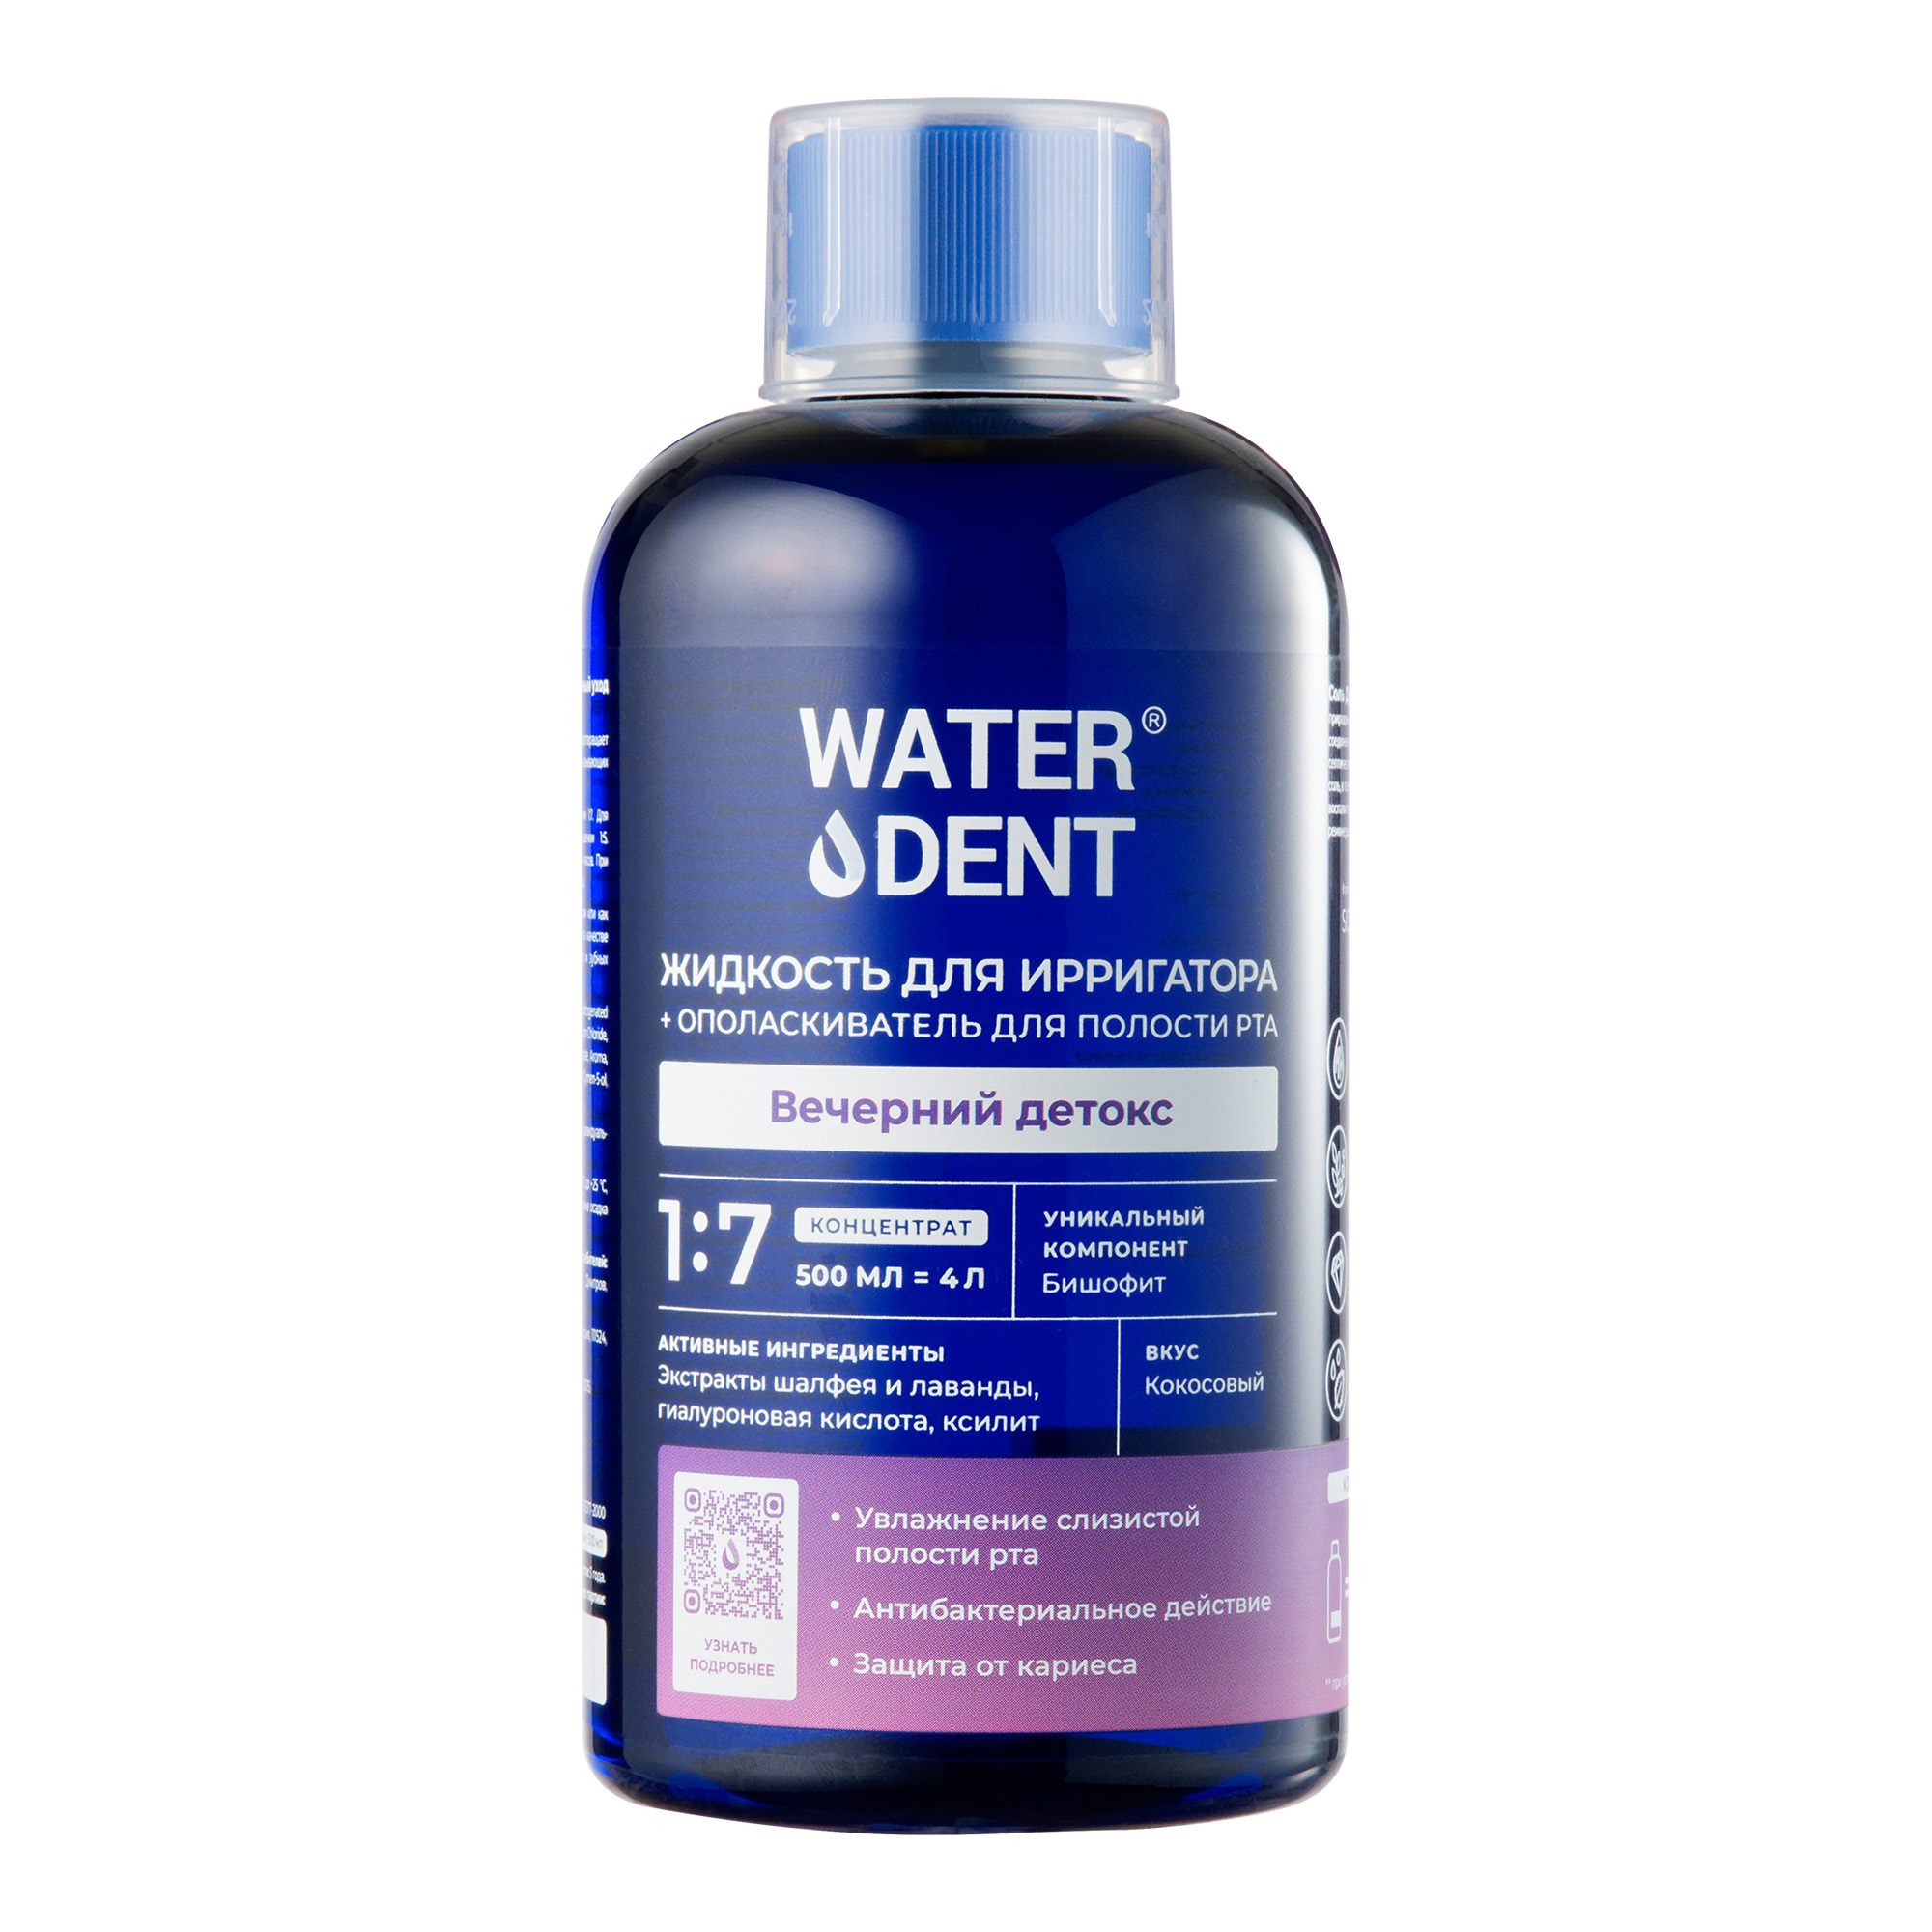 Waterdent, жидкость для ирригатора Вечерний детокс Кокос, флакон 500 мл waterdent жидкость для ирригатора фитокомплекс без фтора концентрат 1 5 500 мл